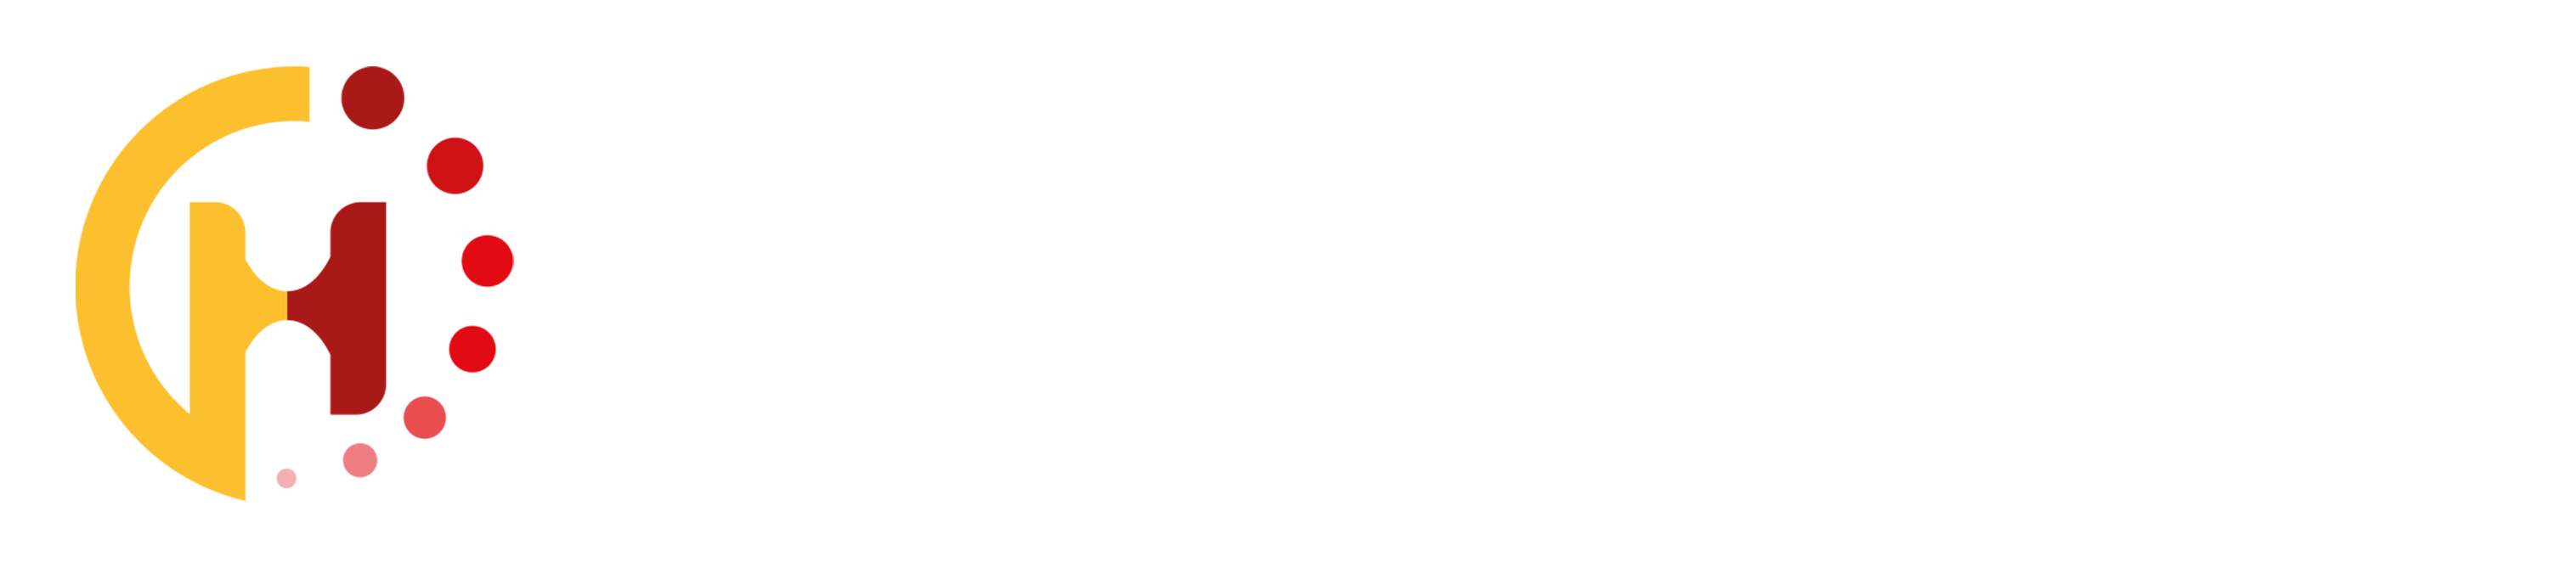 Golden-Heart-logo-horozontal_white